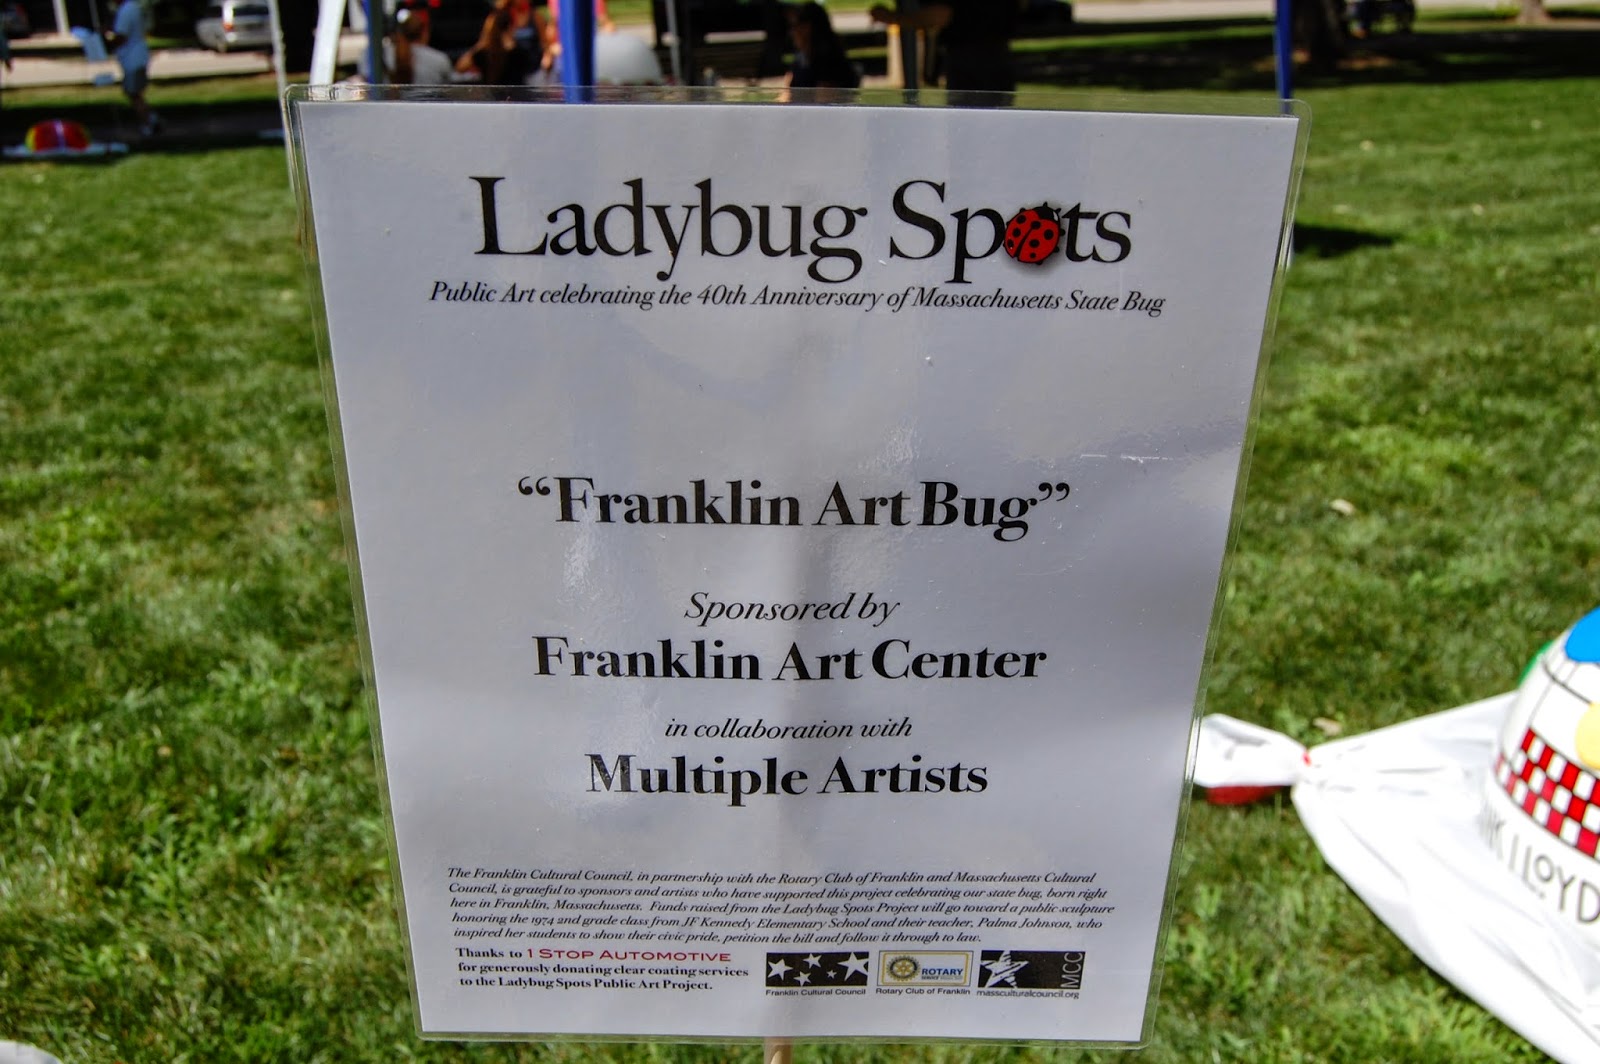 Franklin Art Bug